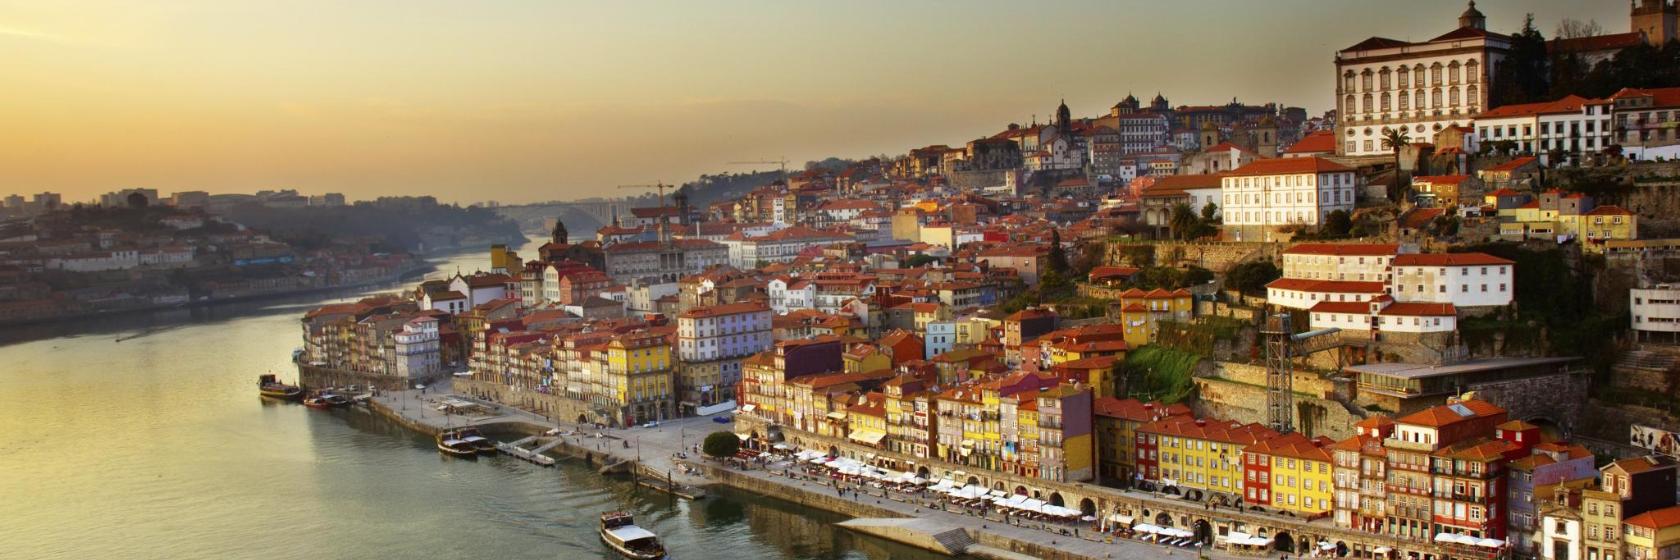 The 10 Best Porto Region Hotels - Where To Stay in Porto Region, Portugal